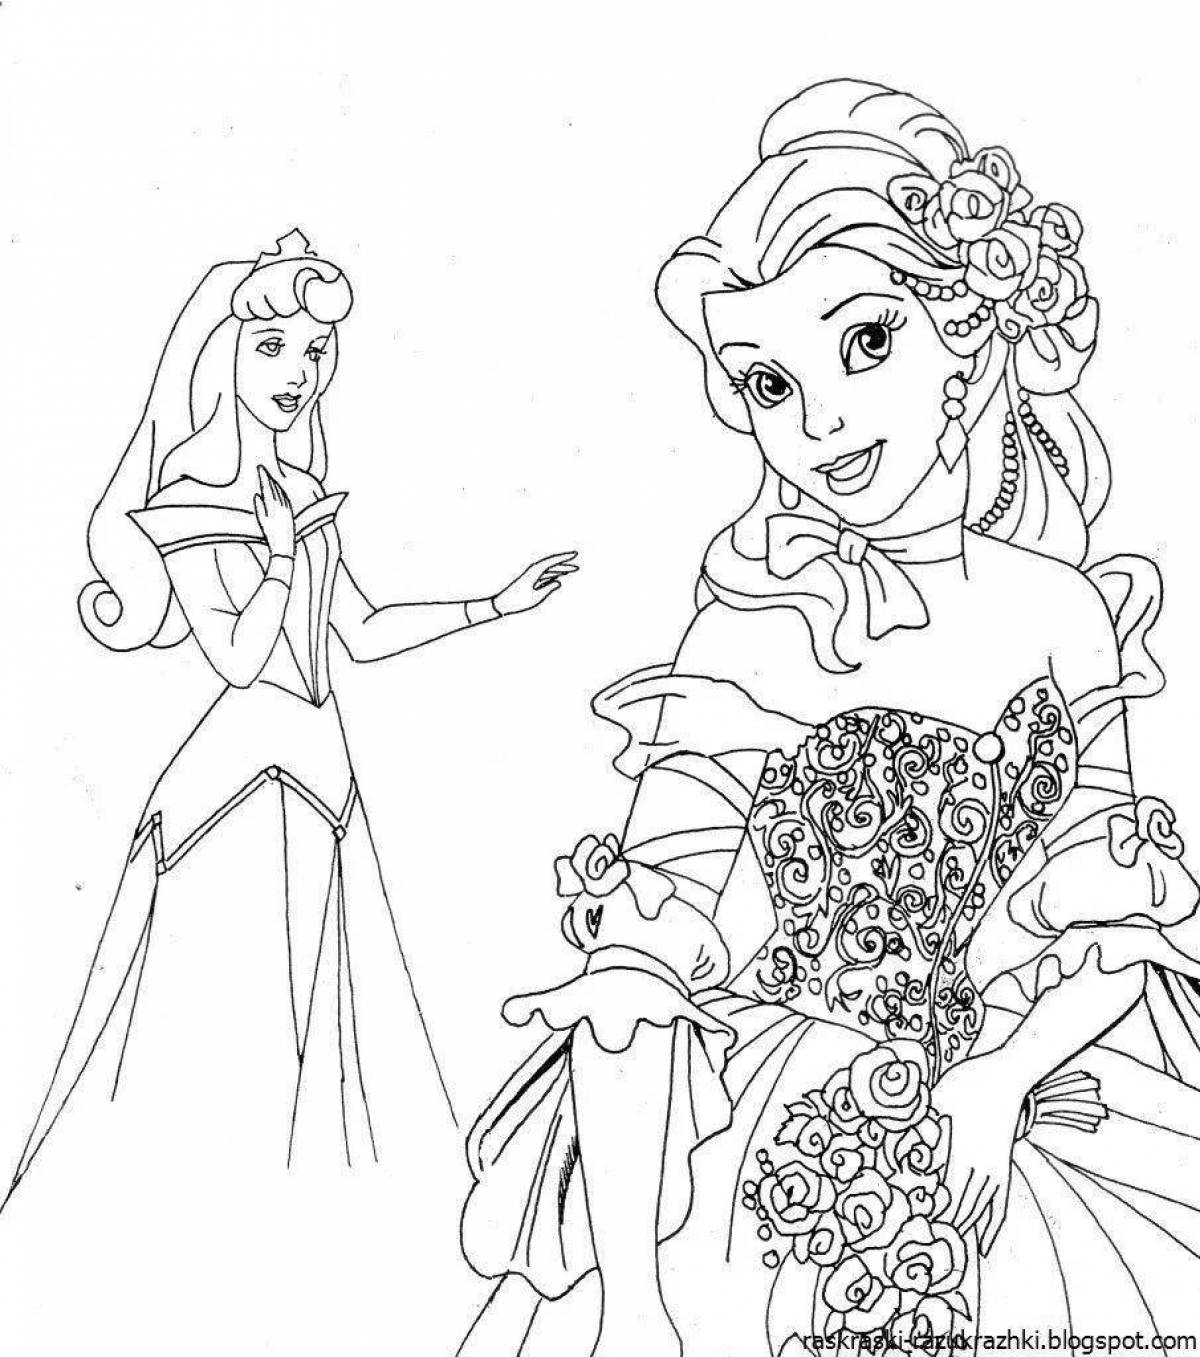 Radiant coloring page disney princess games